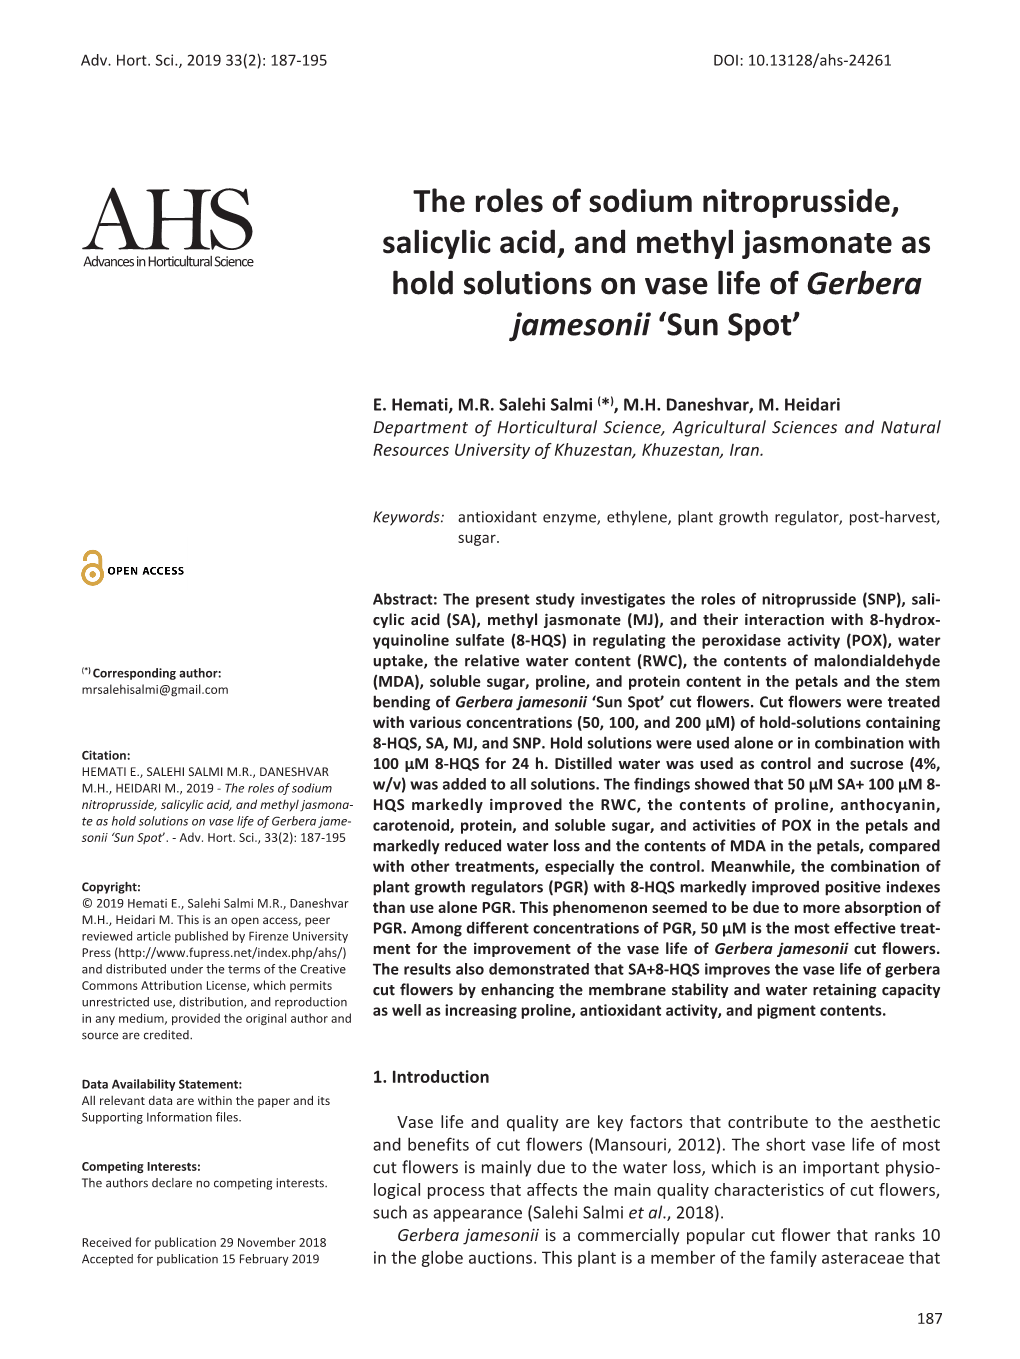 The Roles of Sodium Nitroprusside, Salicylic Acid, and Methyl Jasmonate